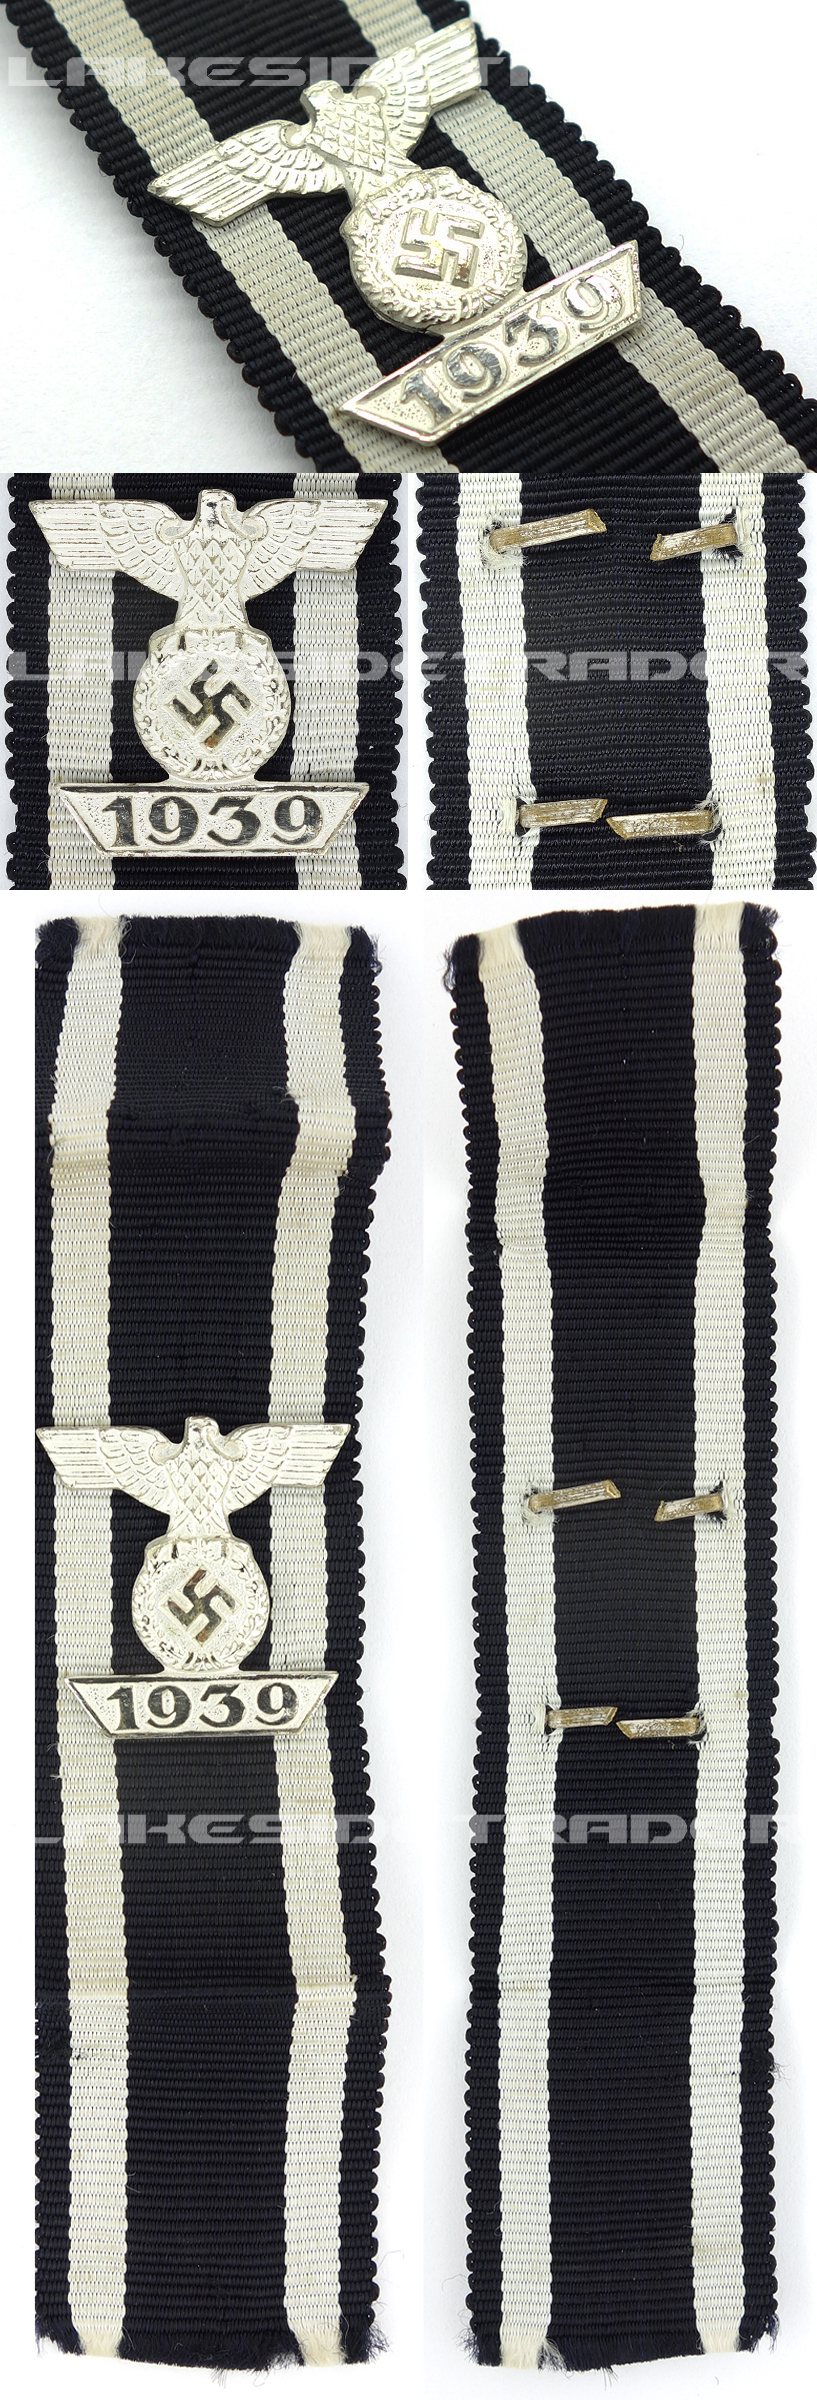 Minty Prinzen - 2nd Class Spange to the Iron Cross 1939